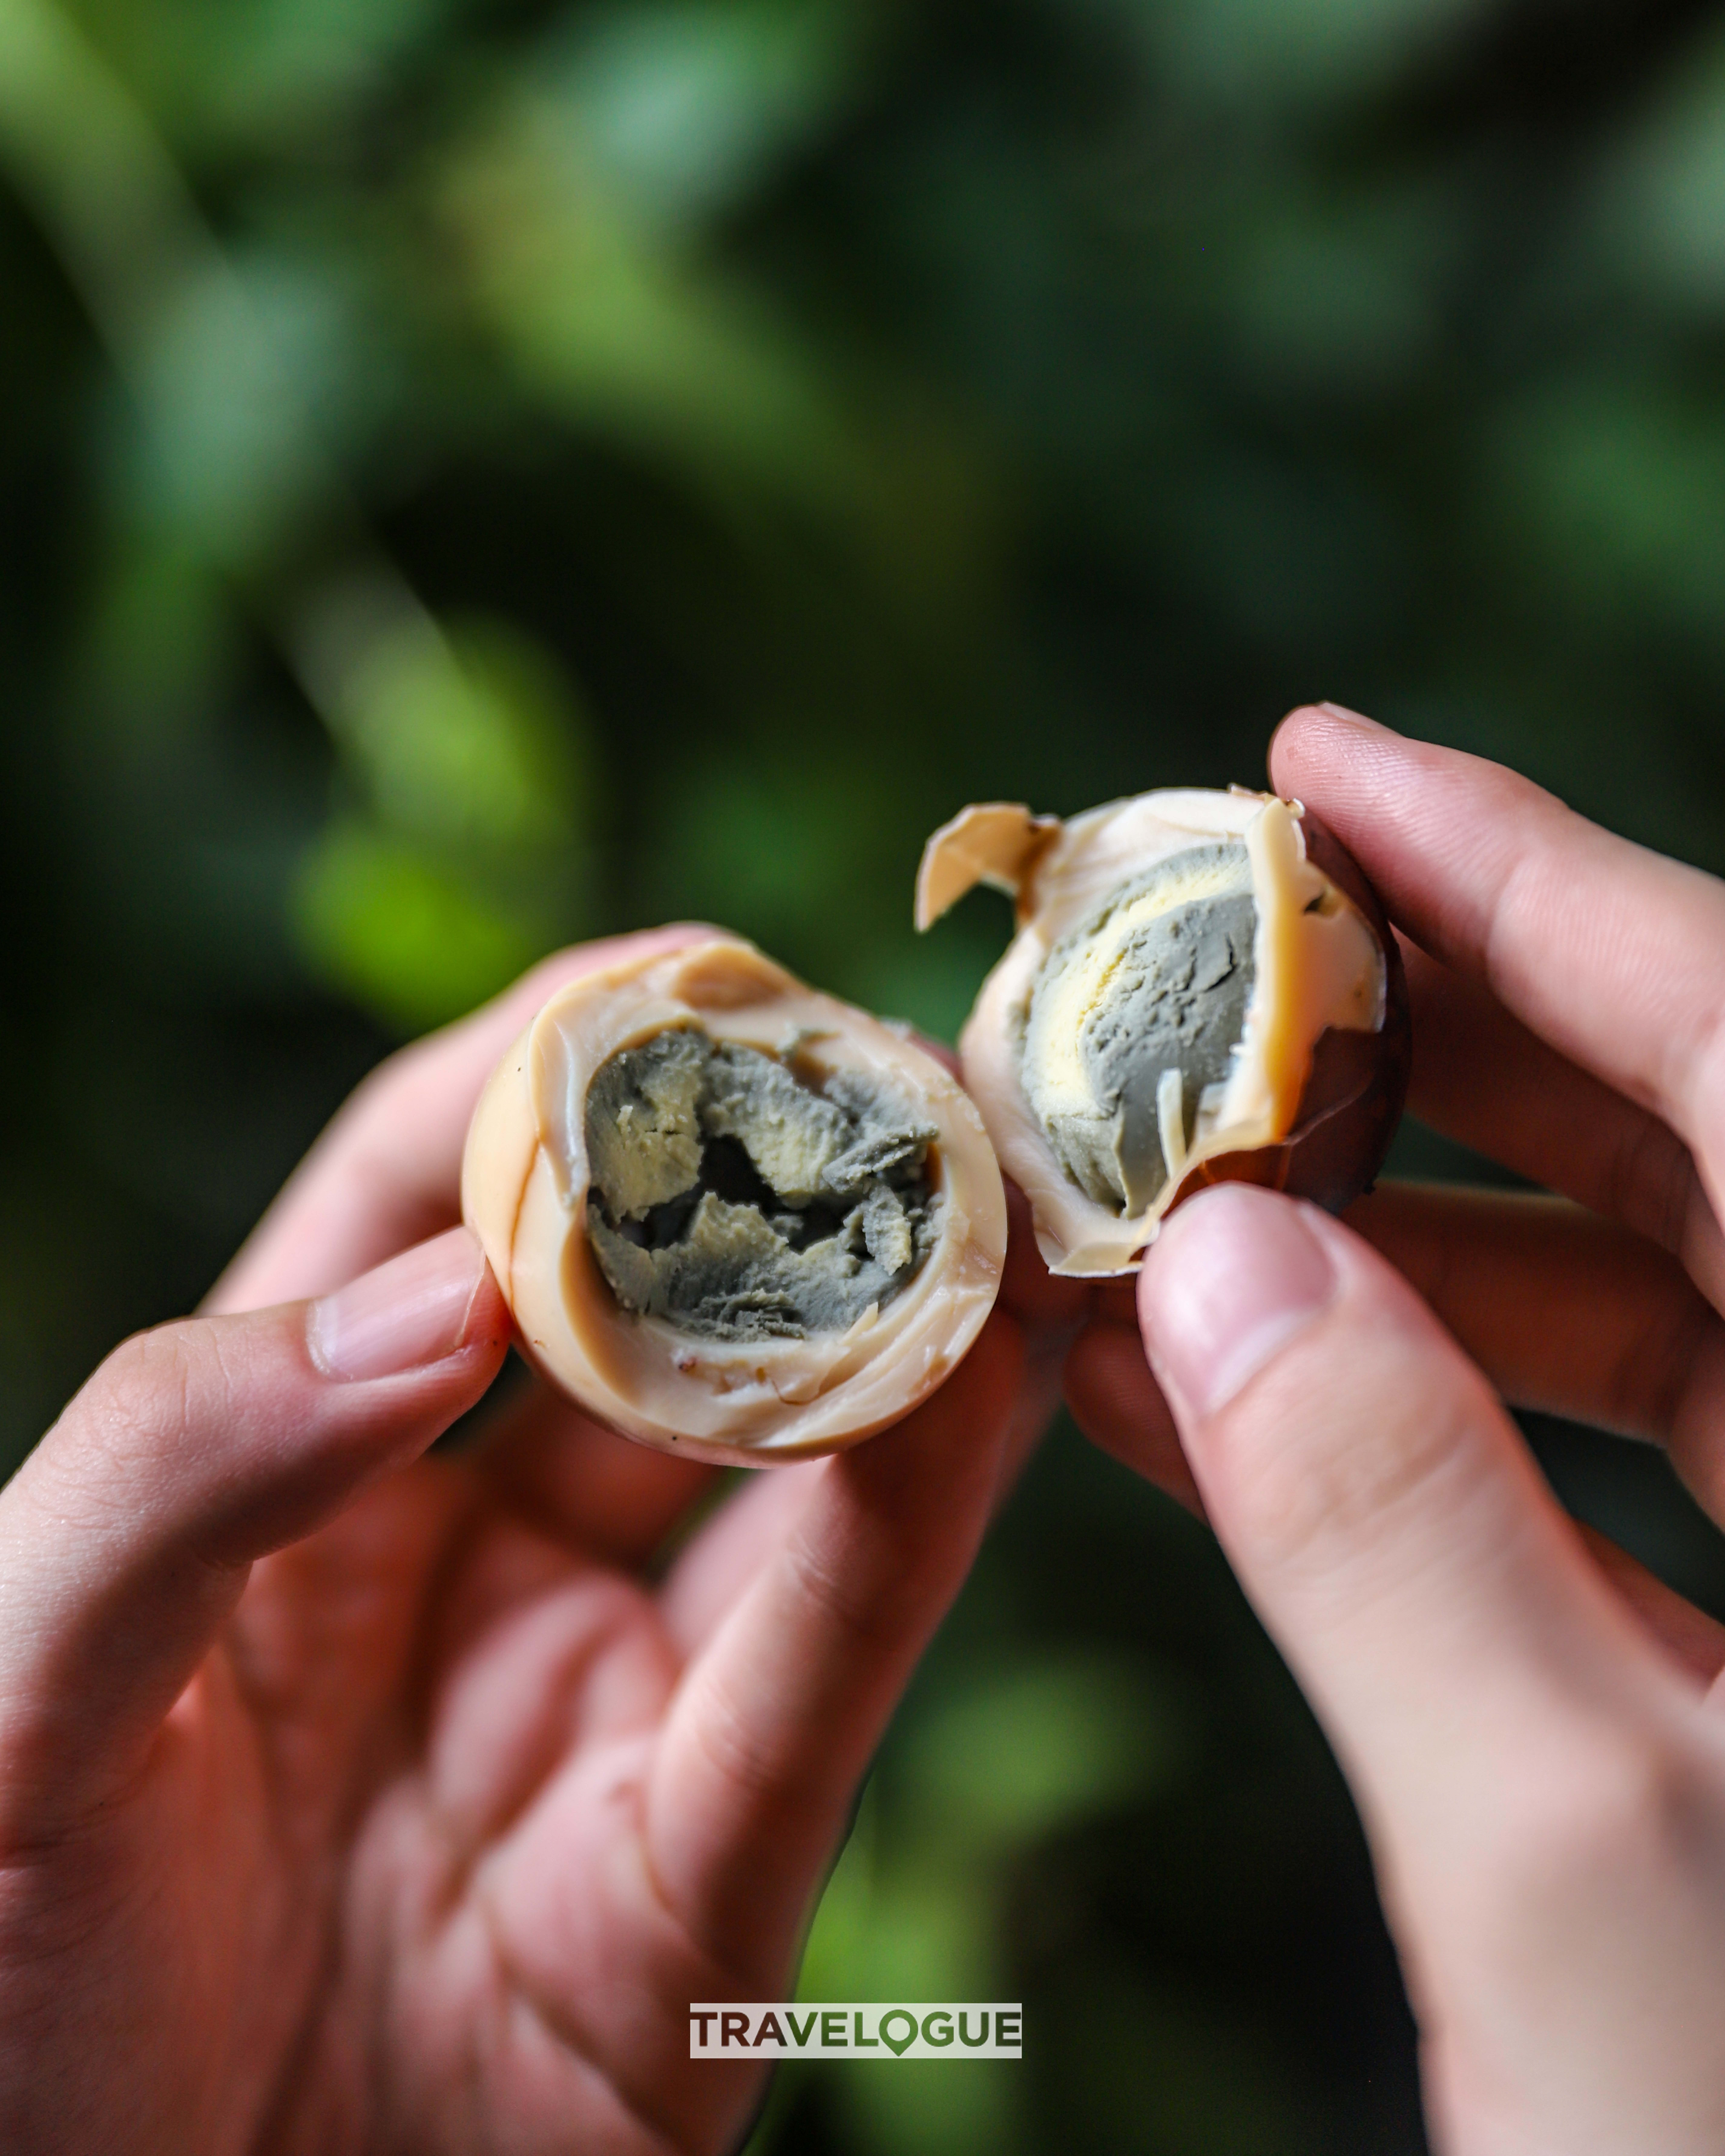 A person holds a partially shelled da hong pao tea egg. /CGTN